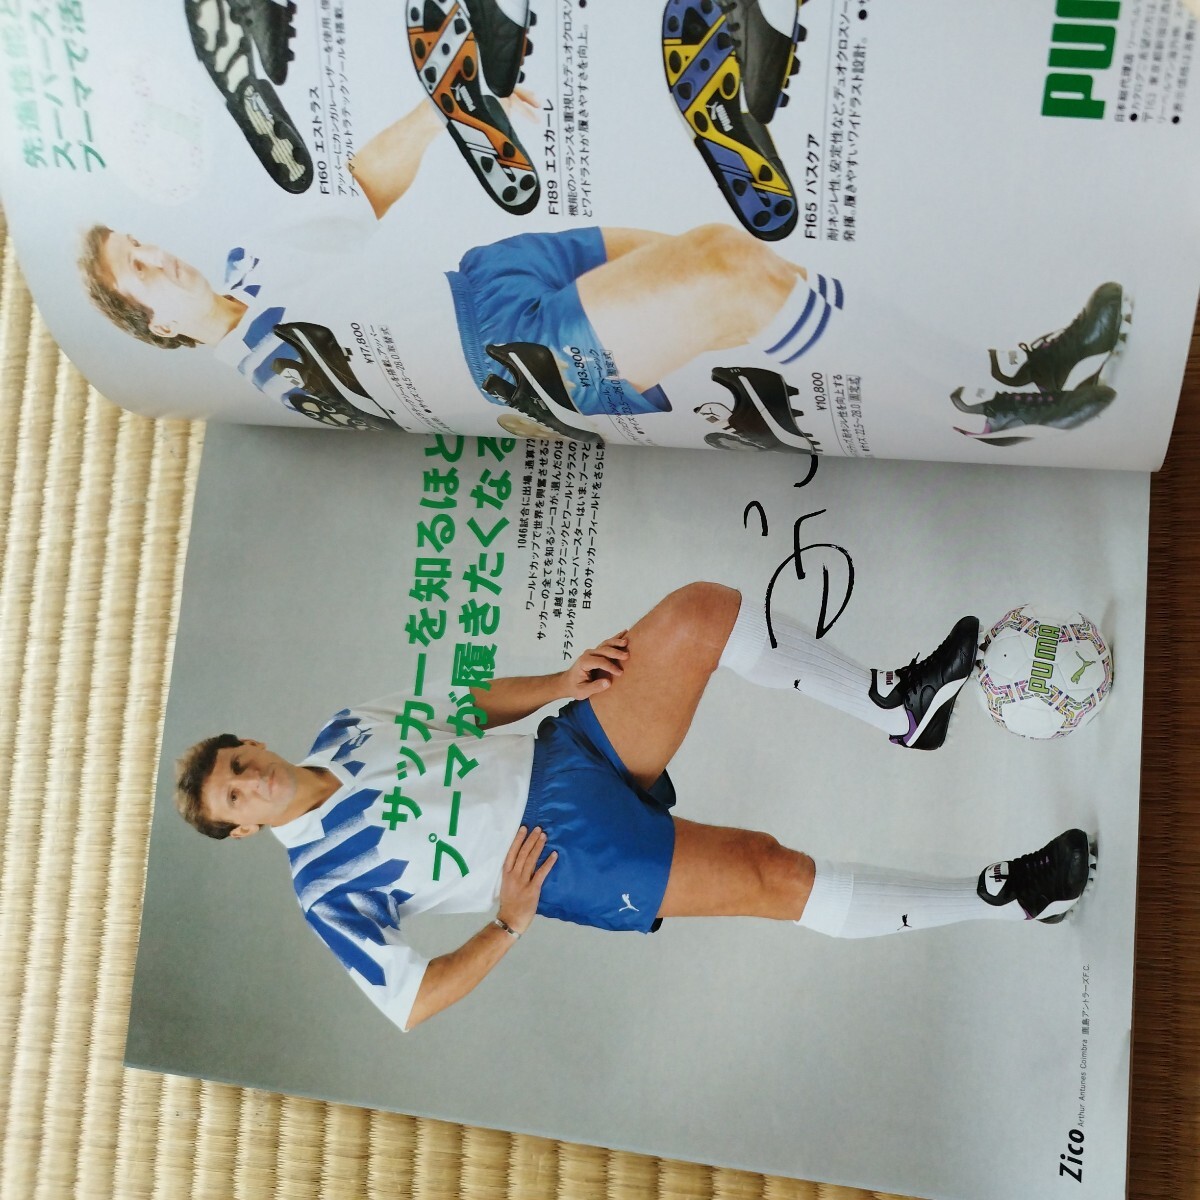  soccer magazine 6/1992 Japan Lee g.. Club three .. good poster attaching Holland You Goss la Via 